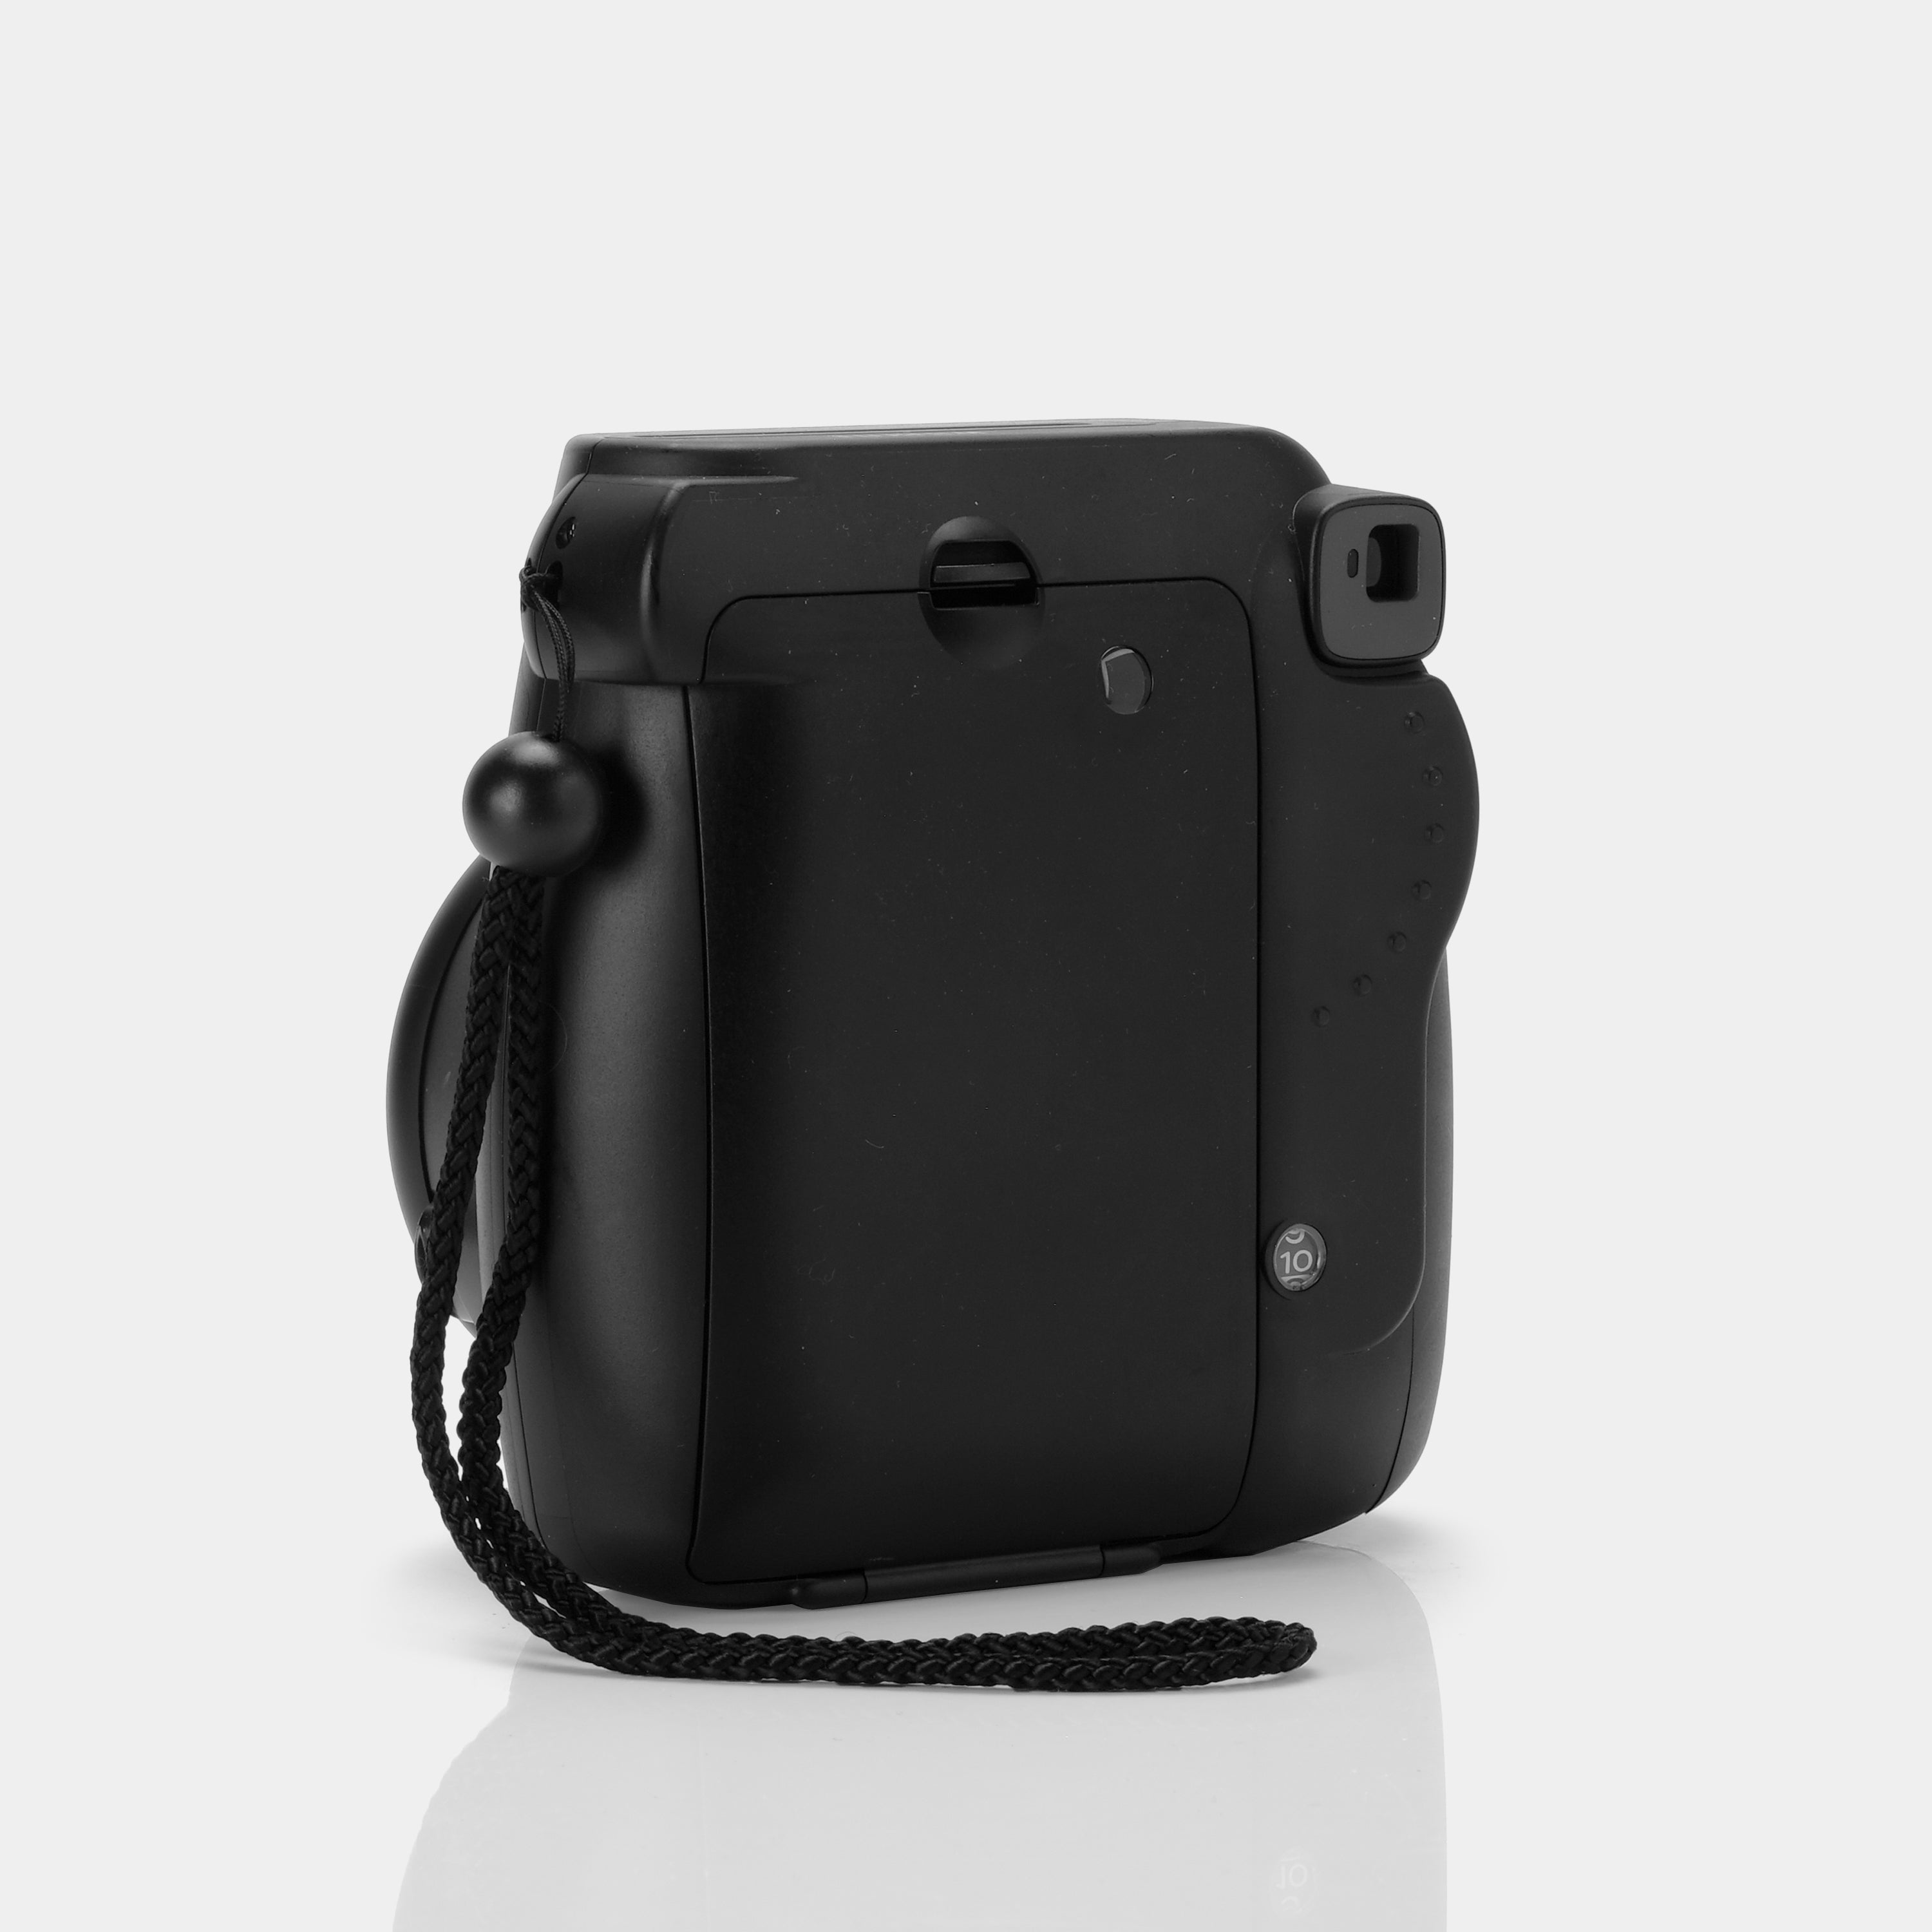 Fujifilm Instax Mini 8 Black Instant Film Camera With Black Bag - Refurbished